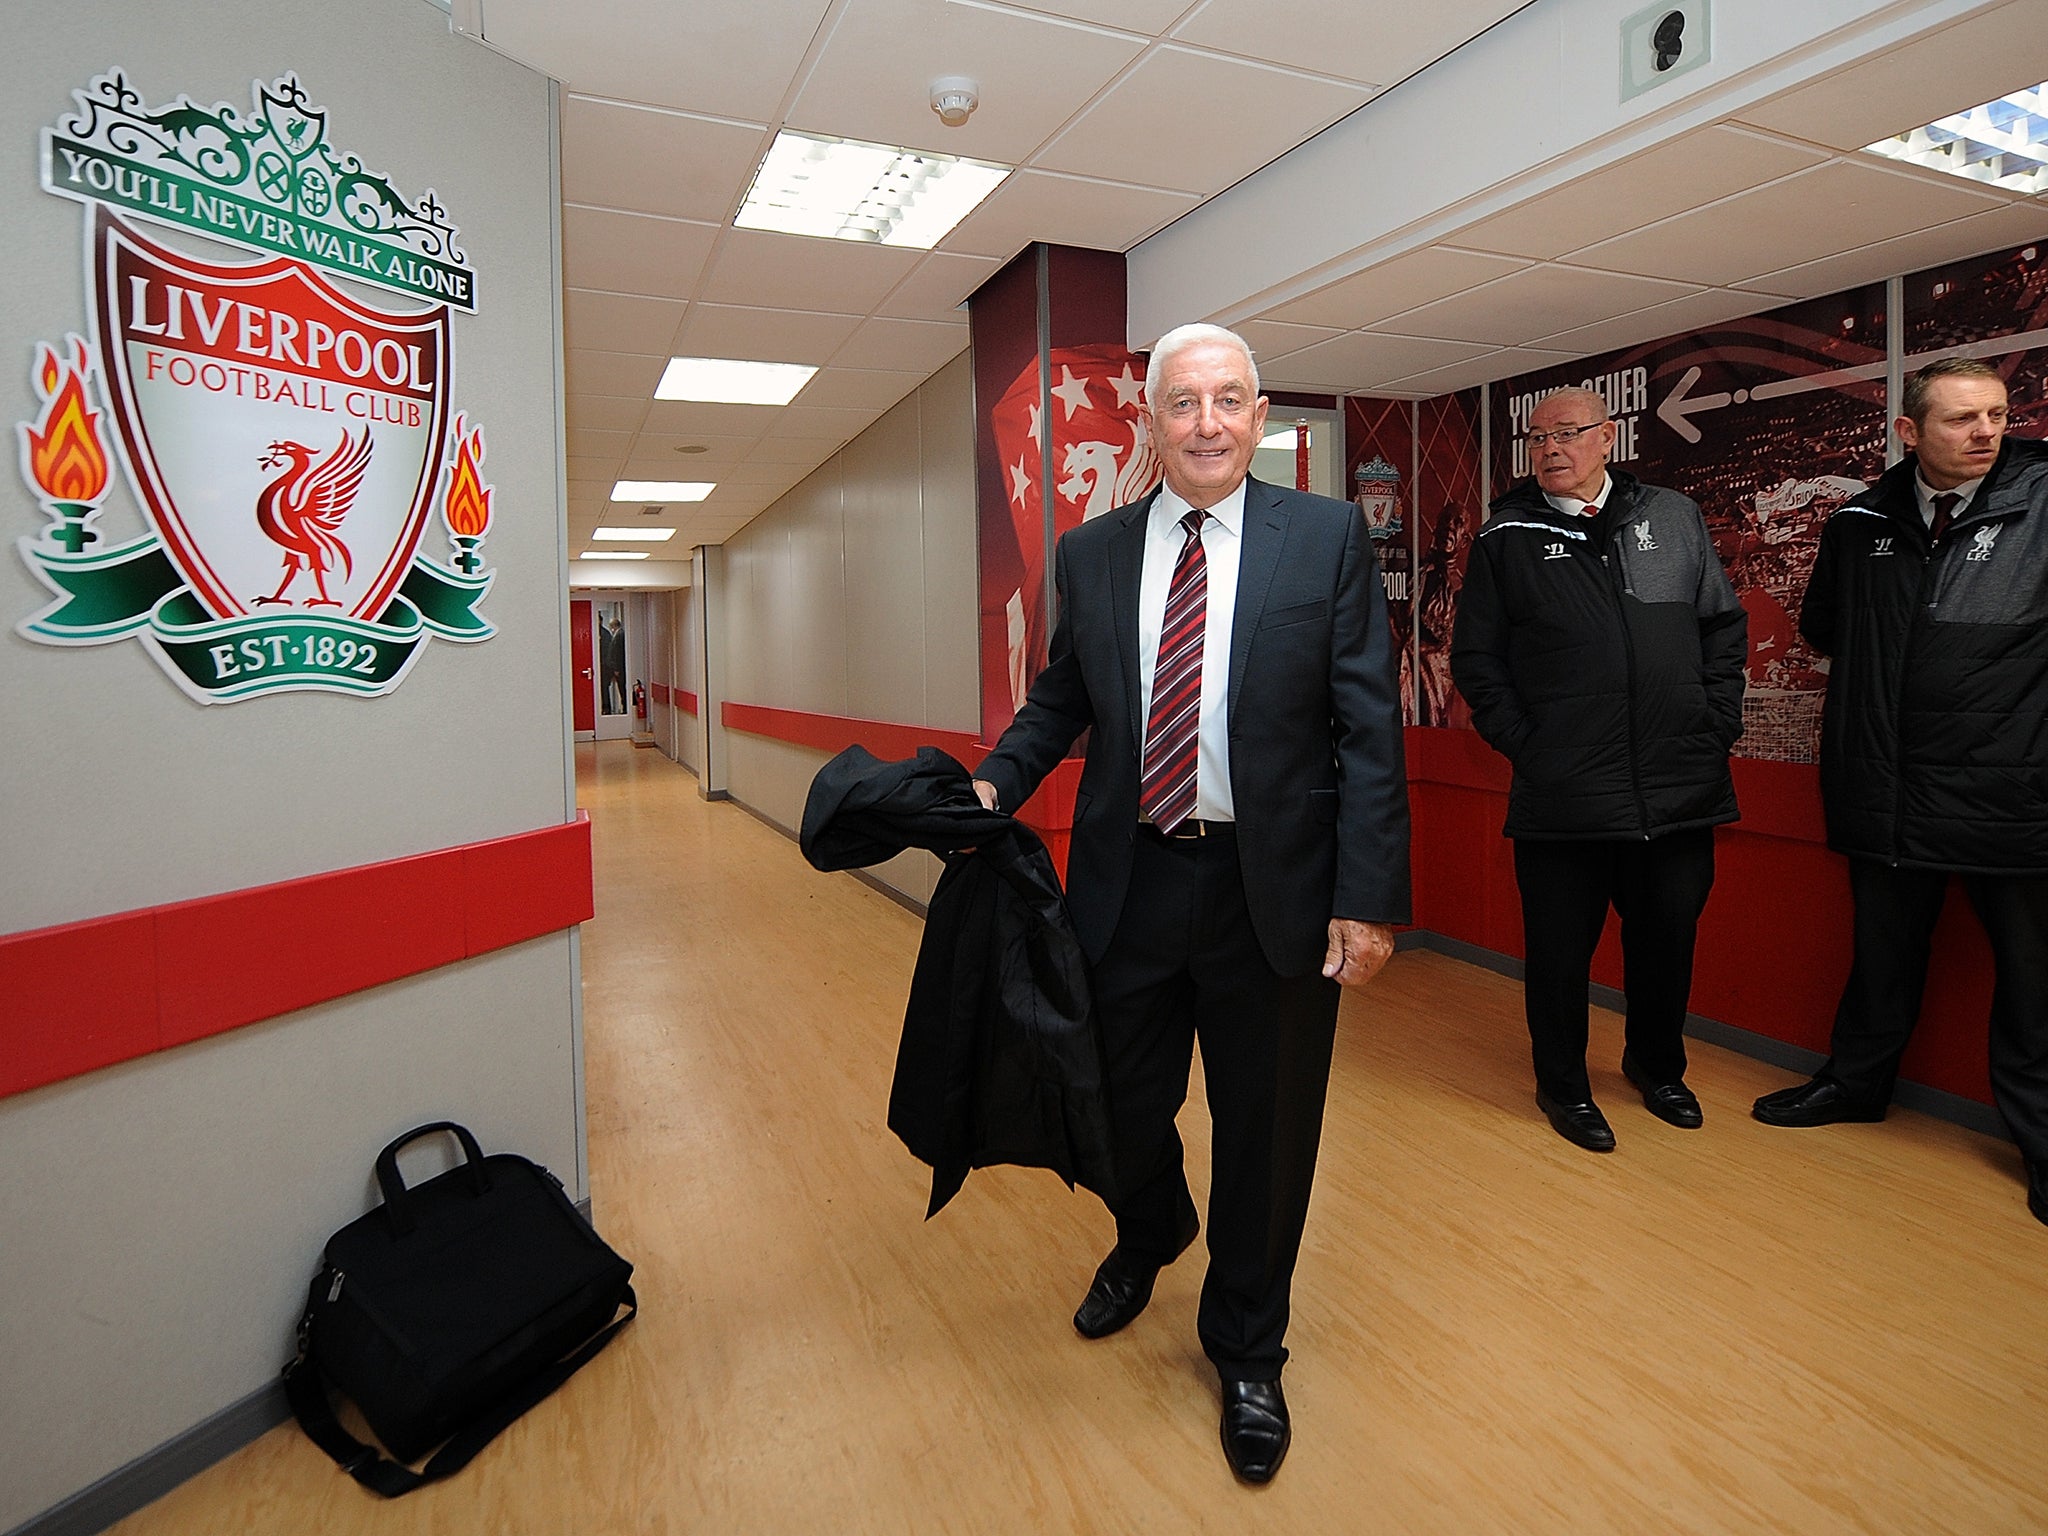 &#13;
Former Liverpool manager Roy Evans&#13;